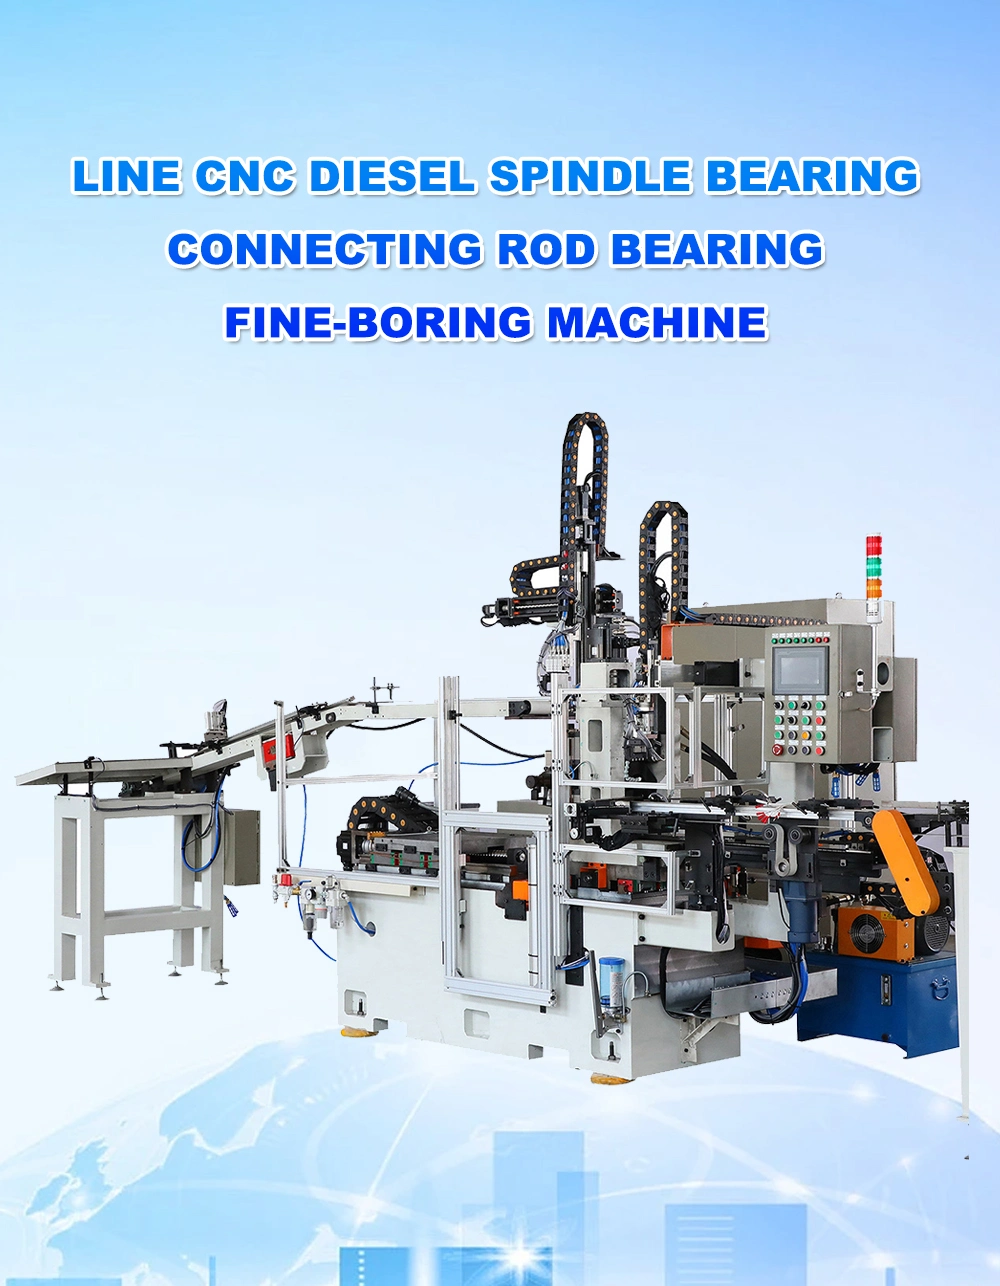 9sliding Bearing Bush Production Line CNC Diesel Spindle Bearing Connecting Rod Bearing Fine-Boring Machine